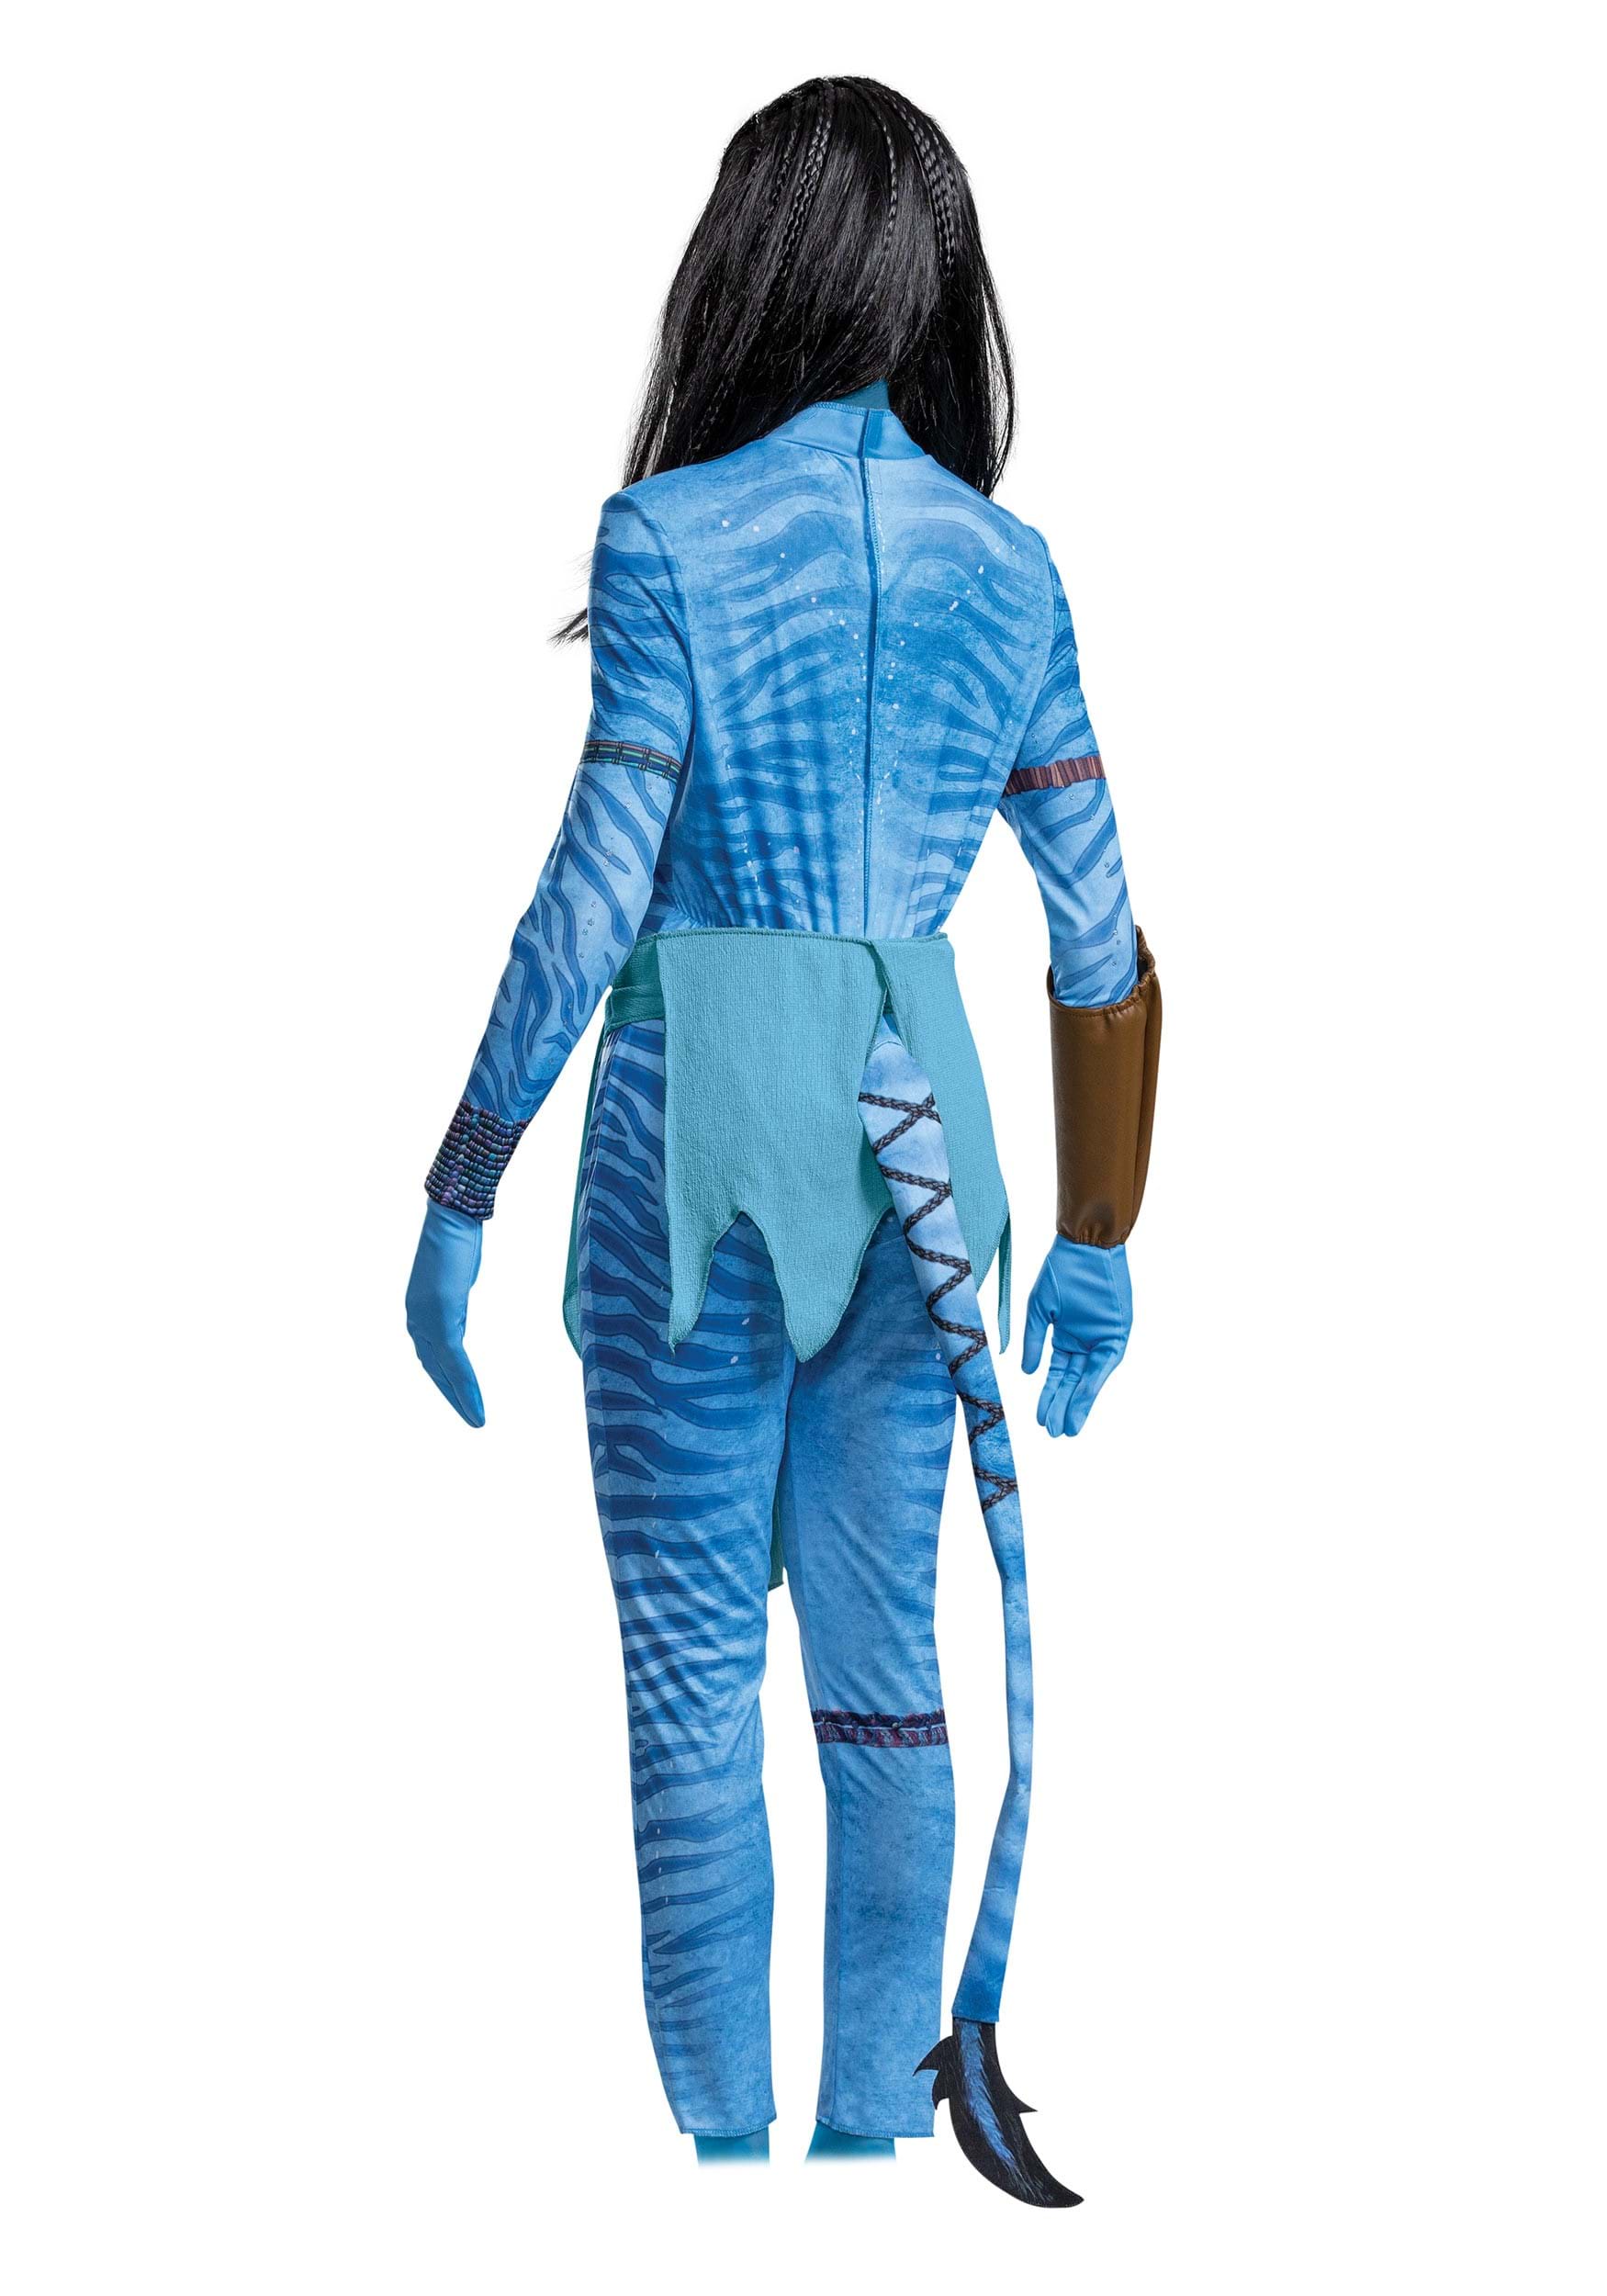 Avatar Deluxe Neytiri Adult Fancy Dress Costume